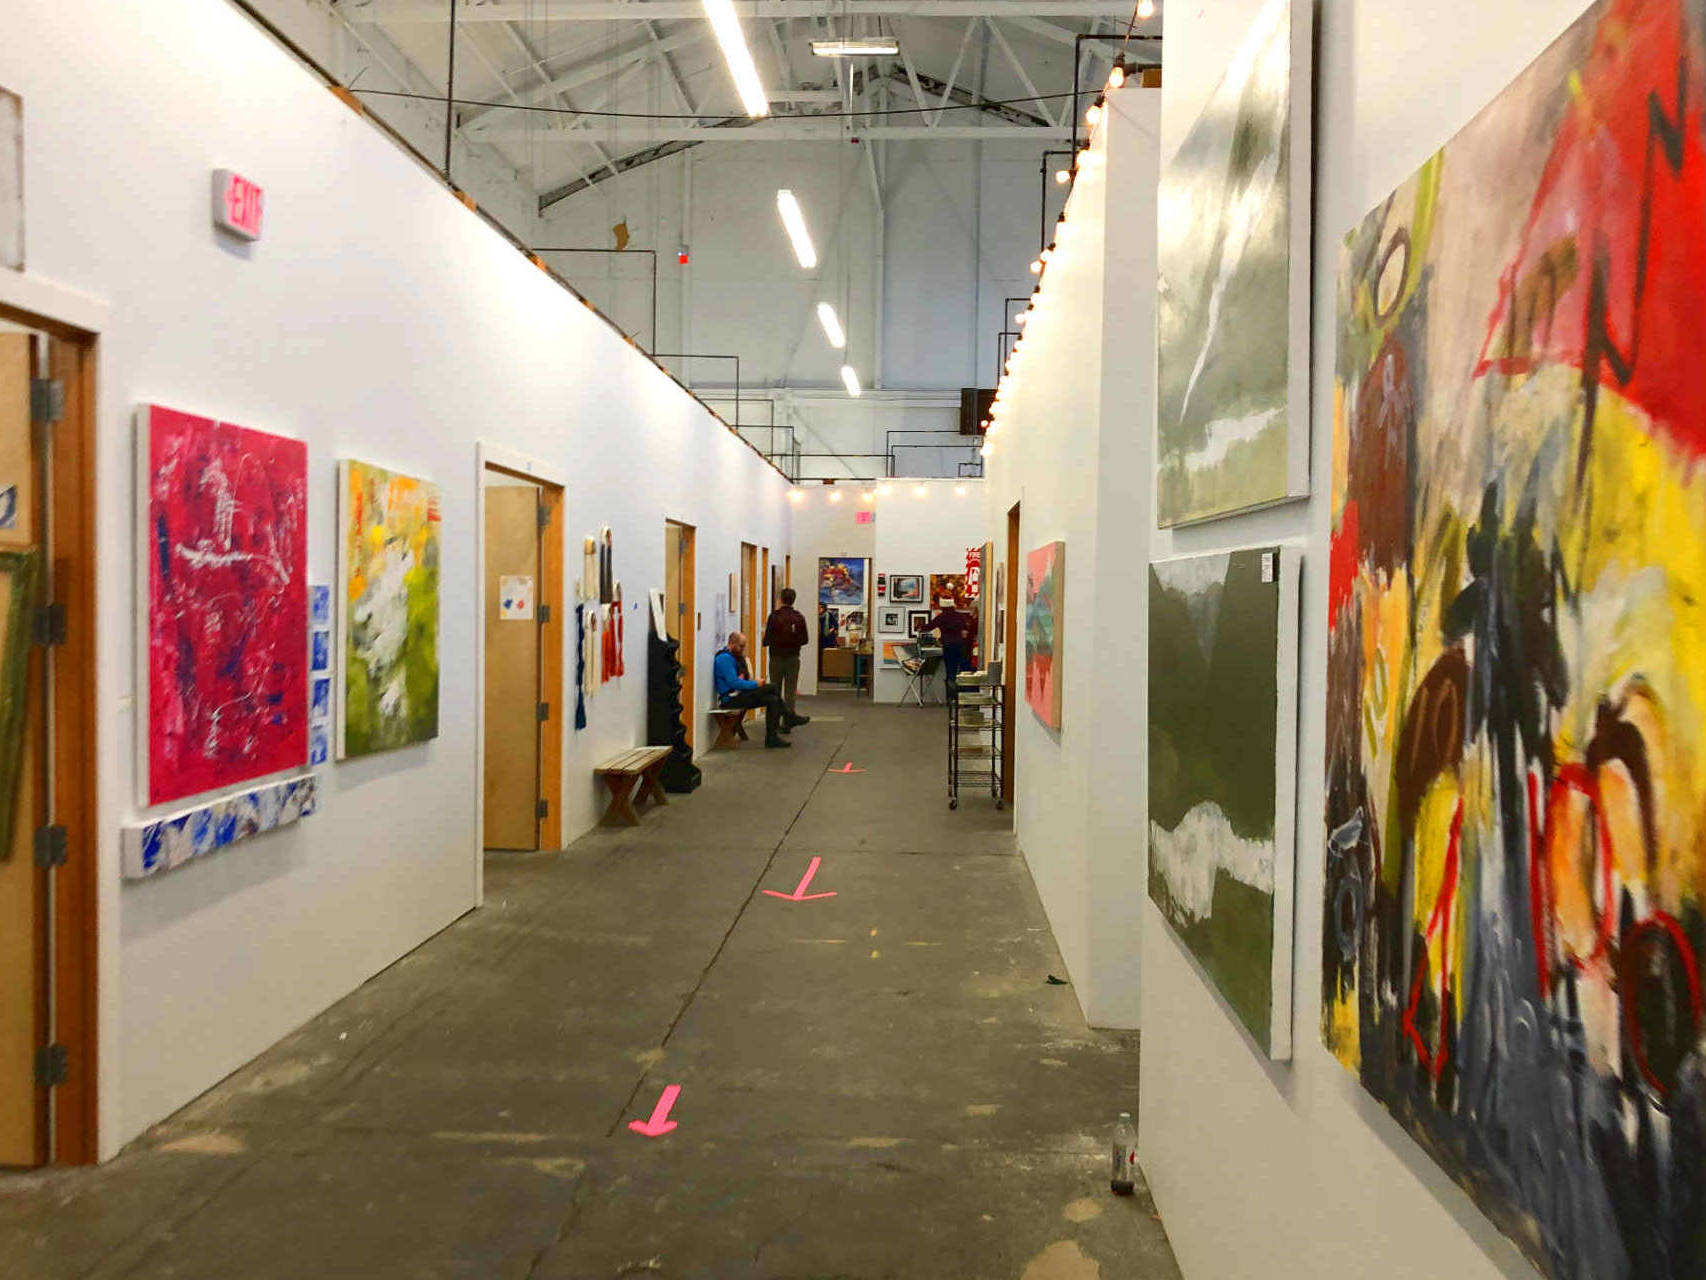 shared gallery hallway